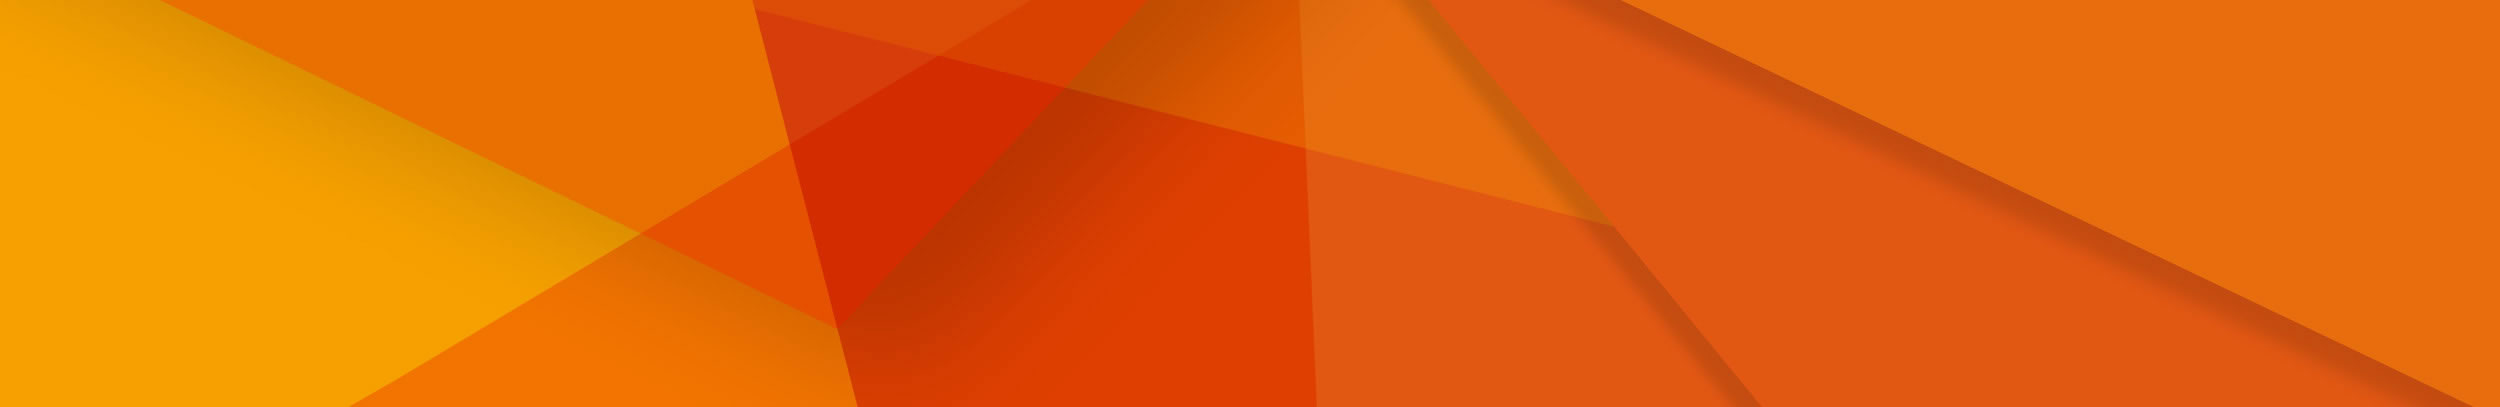 geometric background images in orange